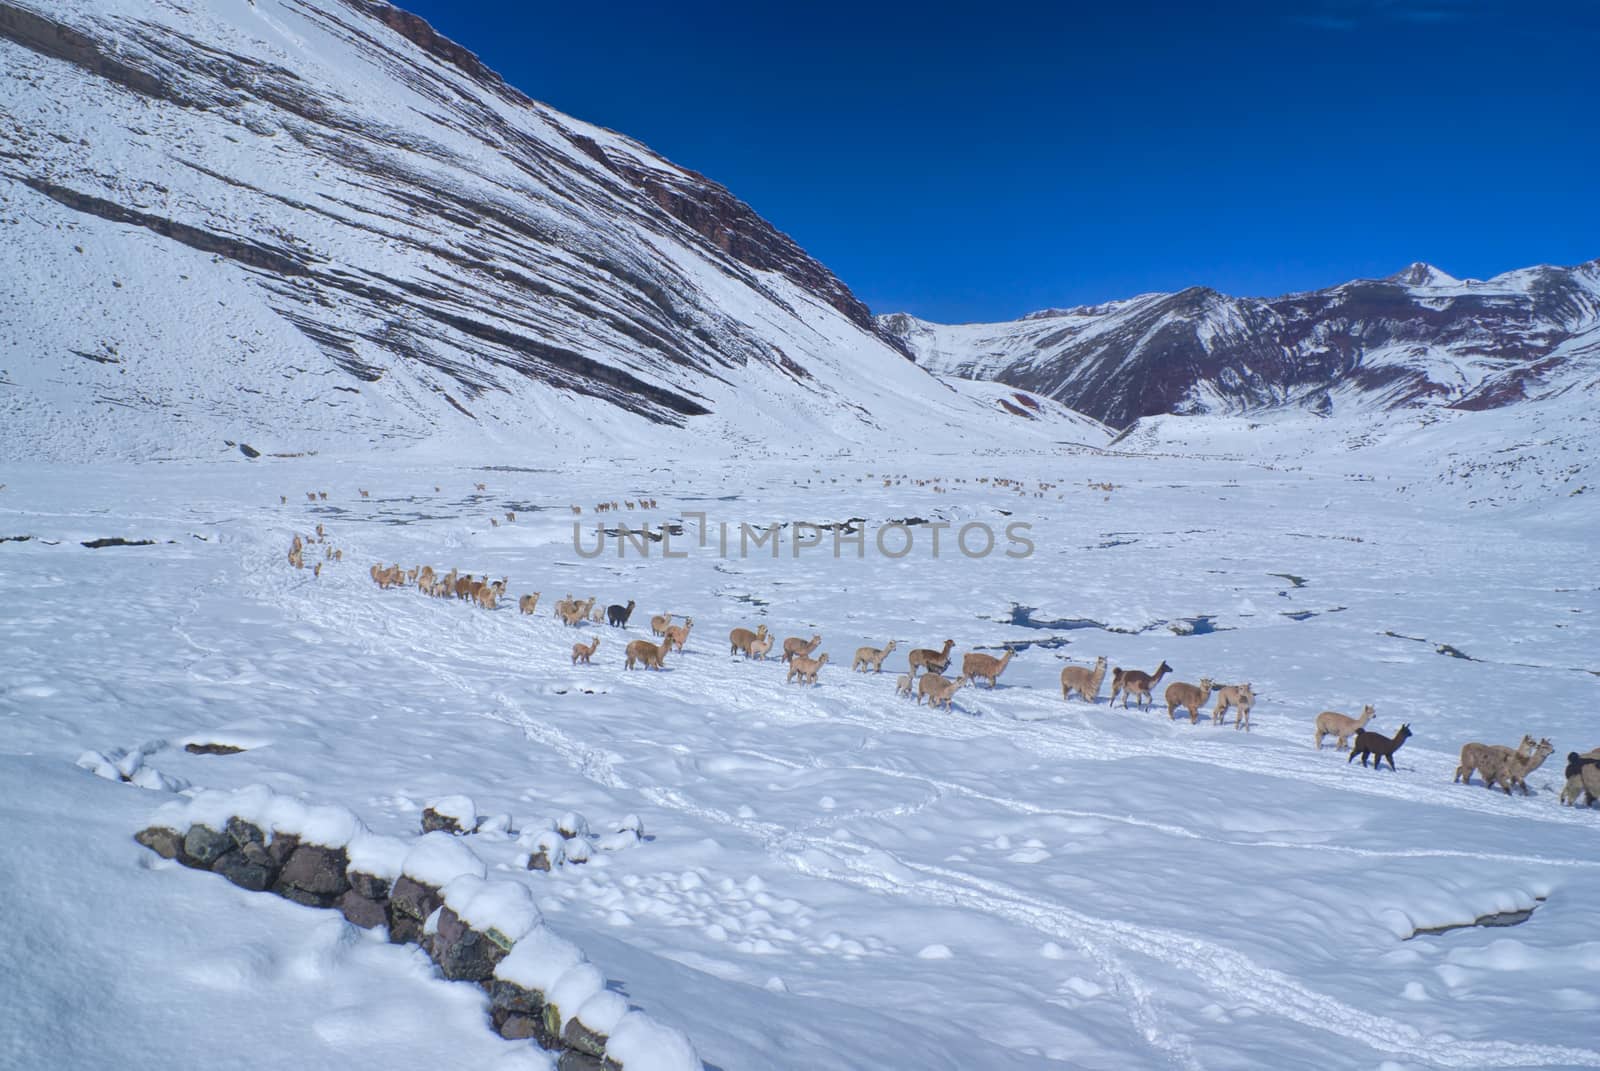 Herd of Llamas in Andes by MichalKnitl